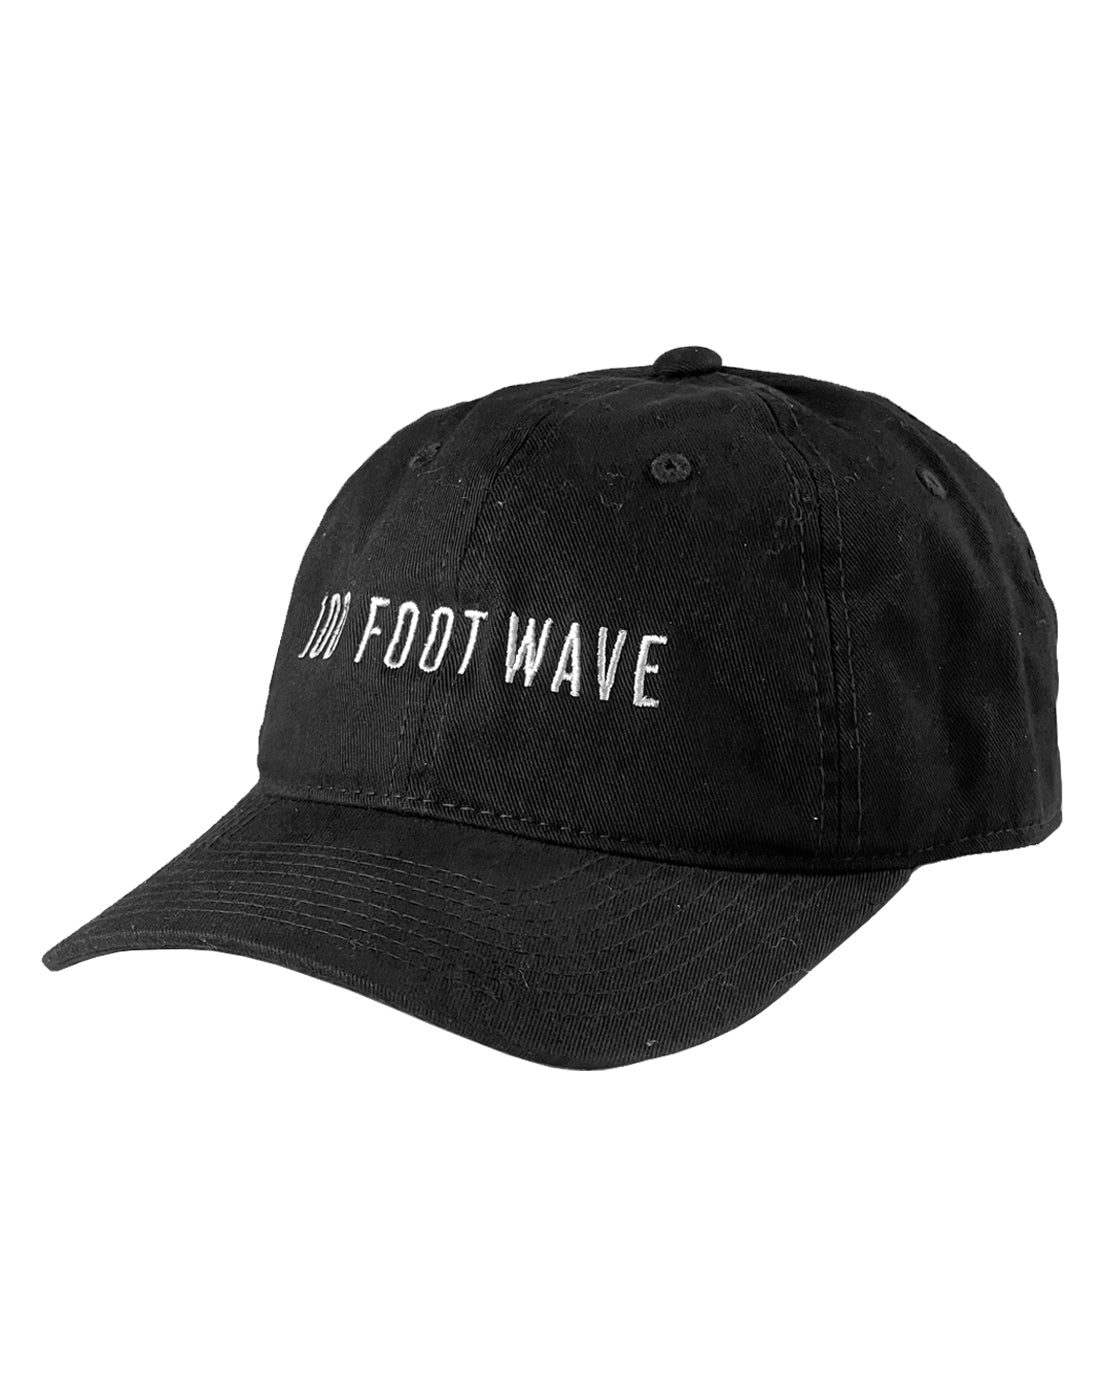 100 Foot Wave Joe Hat